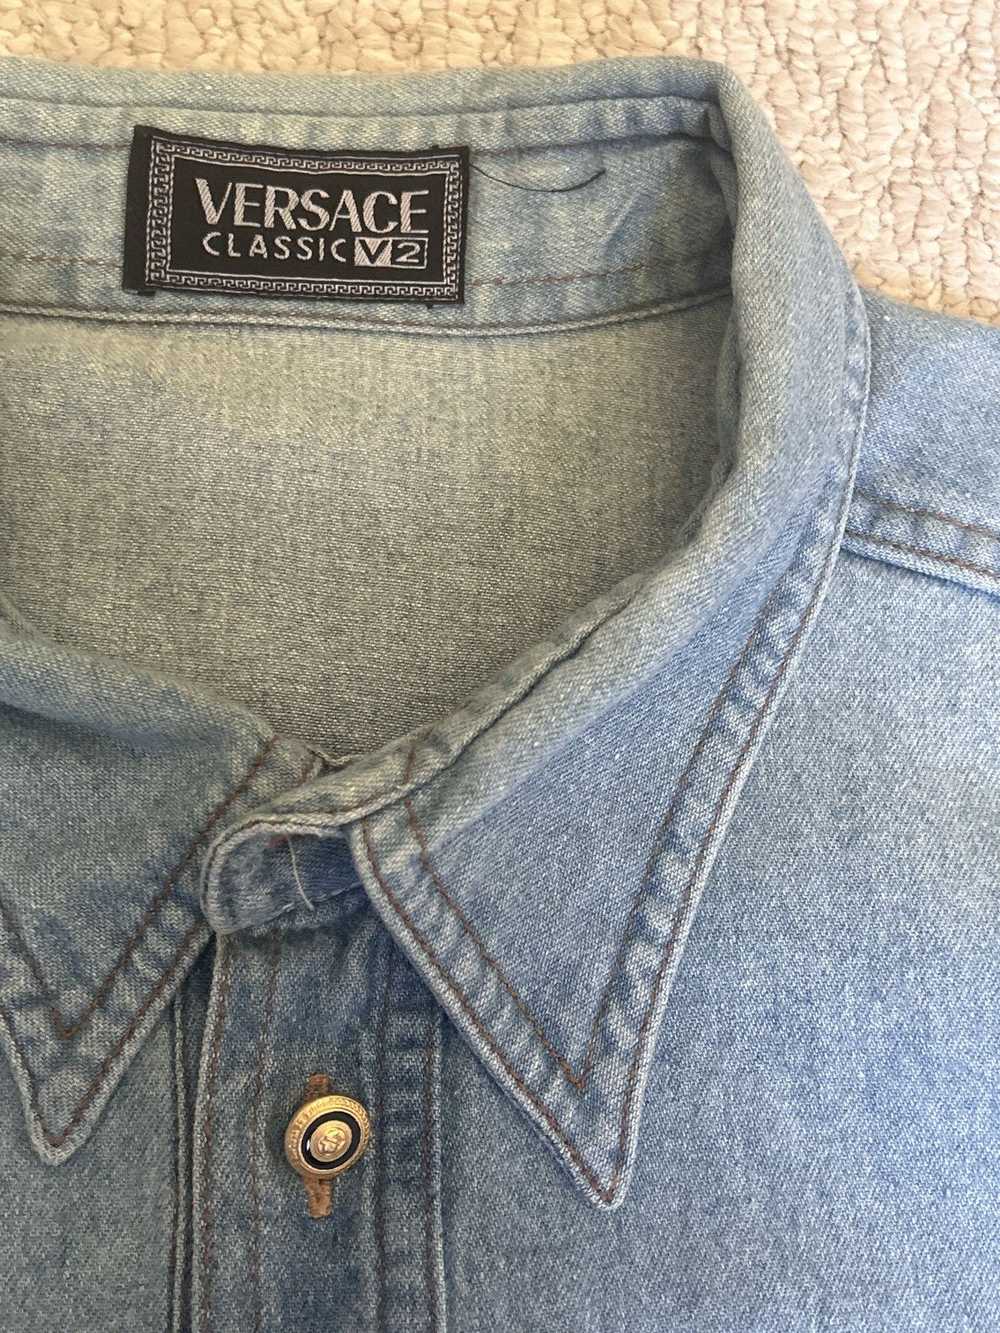 Versace Versace Denim Button Down - image 2